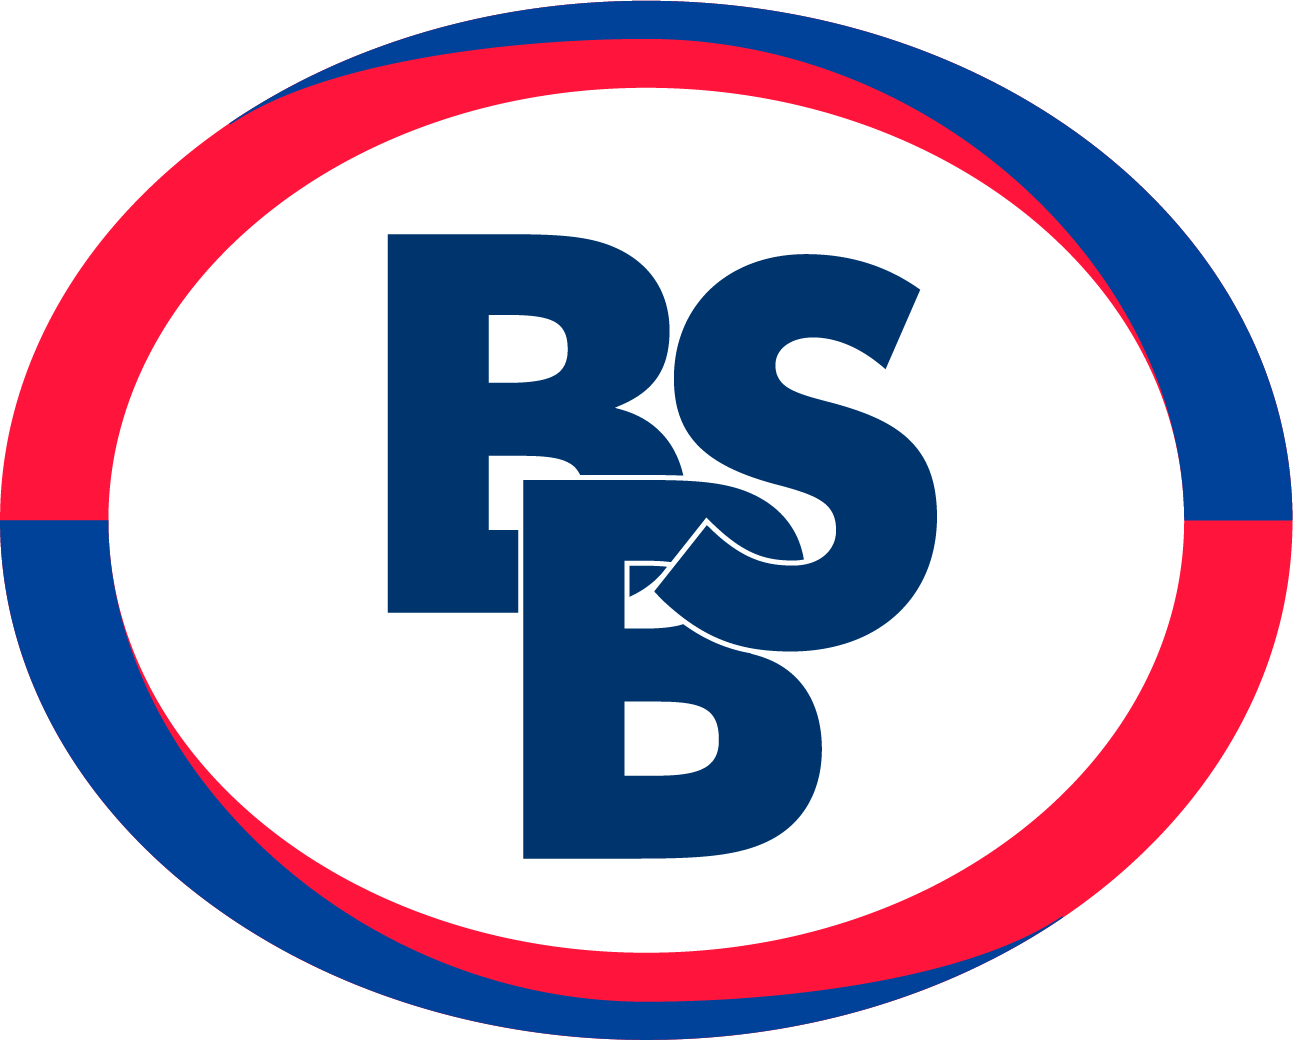 BBS logo 72dpi